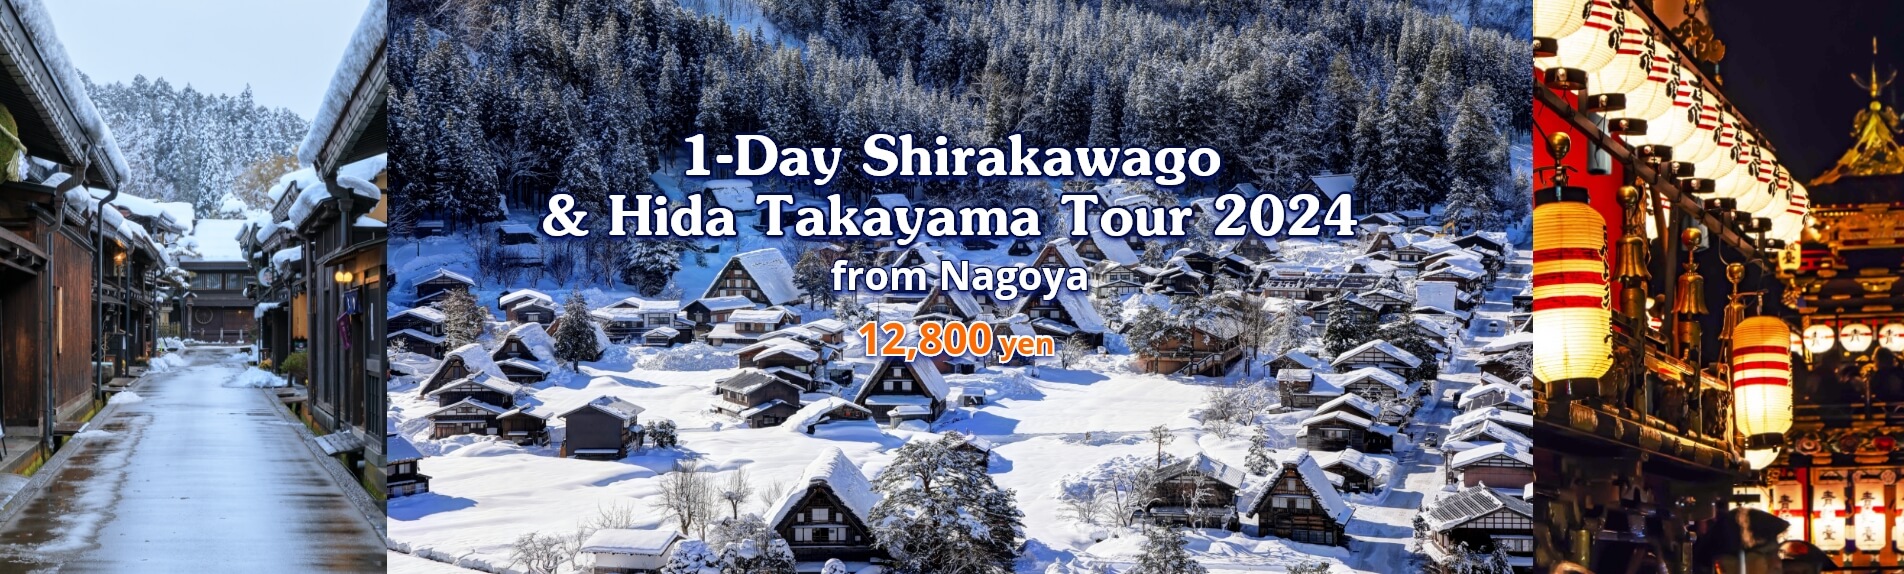 1-Day Shirakawago & Hida Takayama Tour 2024 from Nagoya